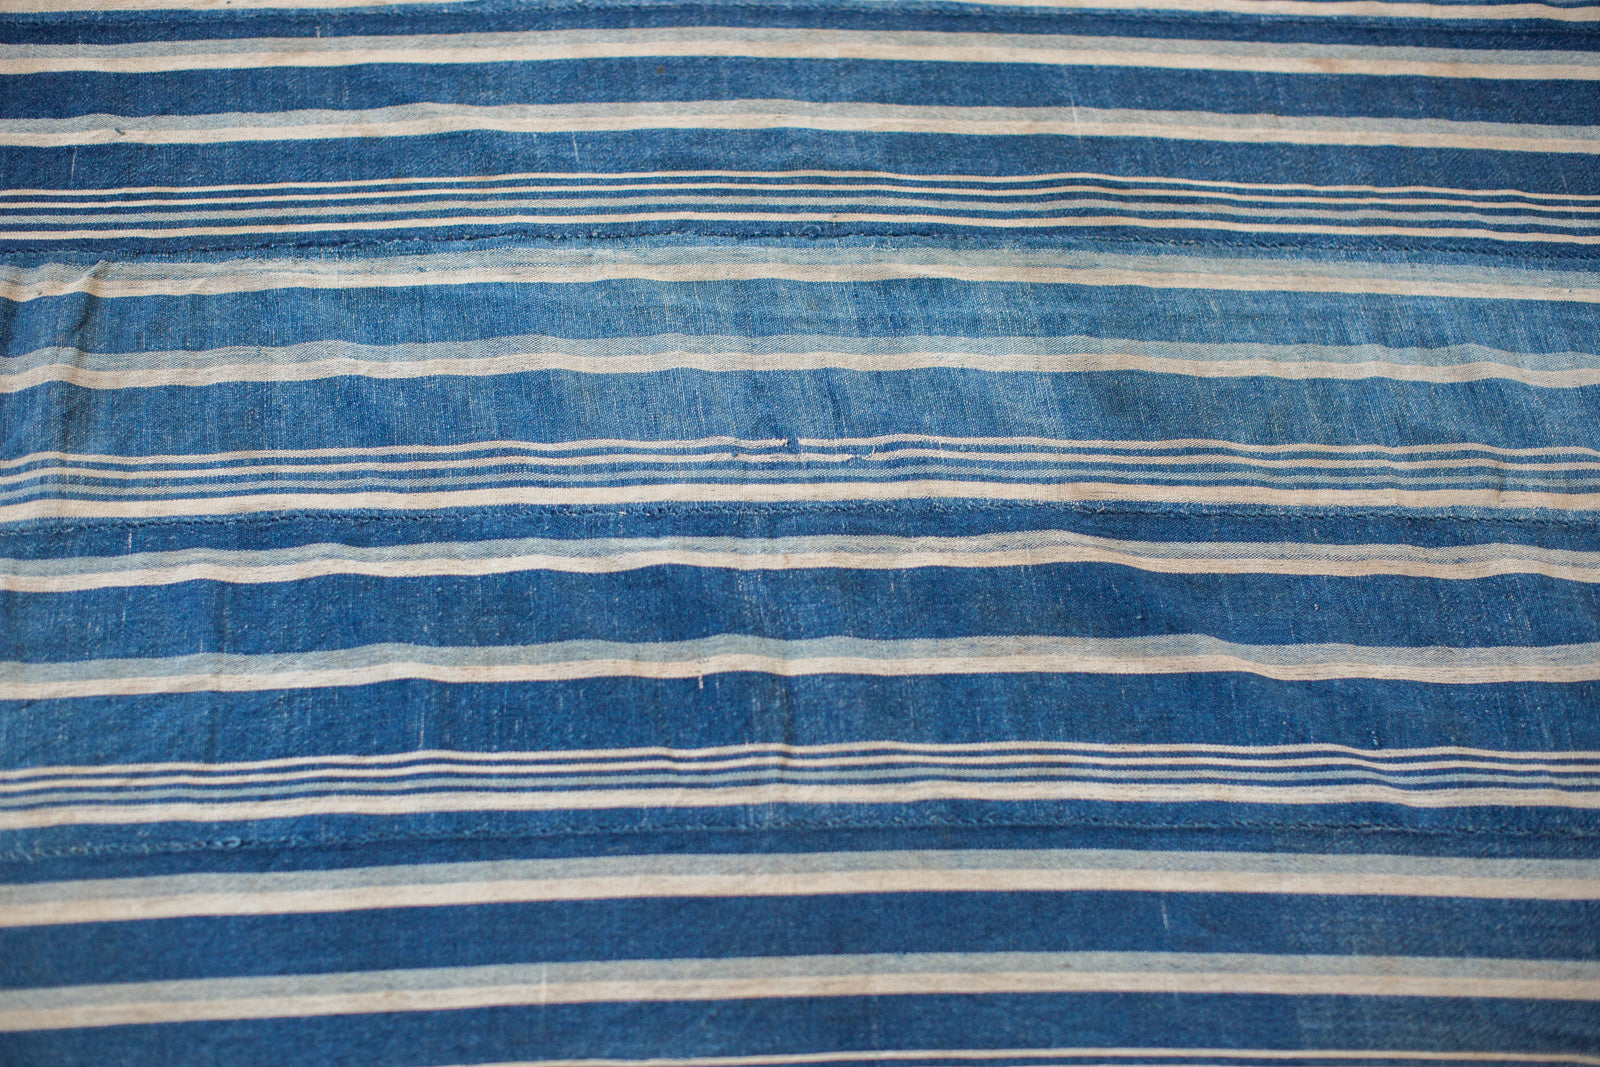 3.5x5 Indigo Blue Striped Textile